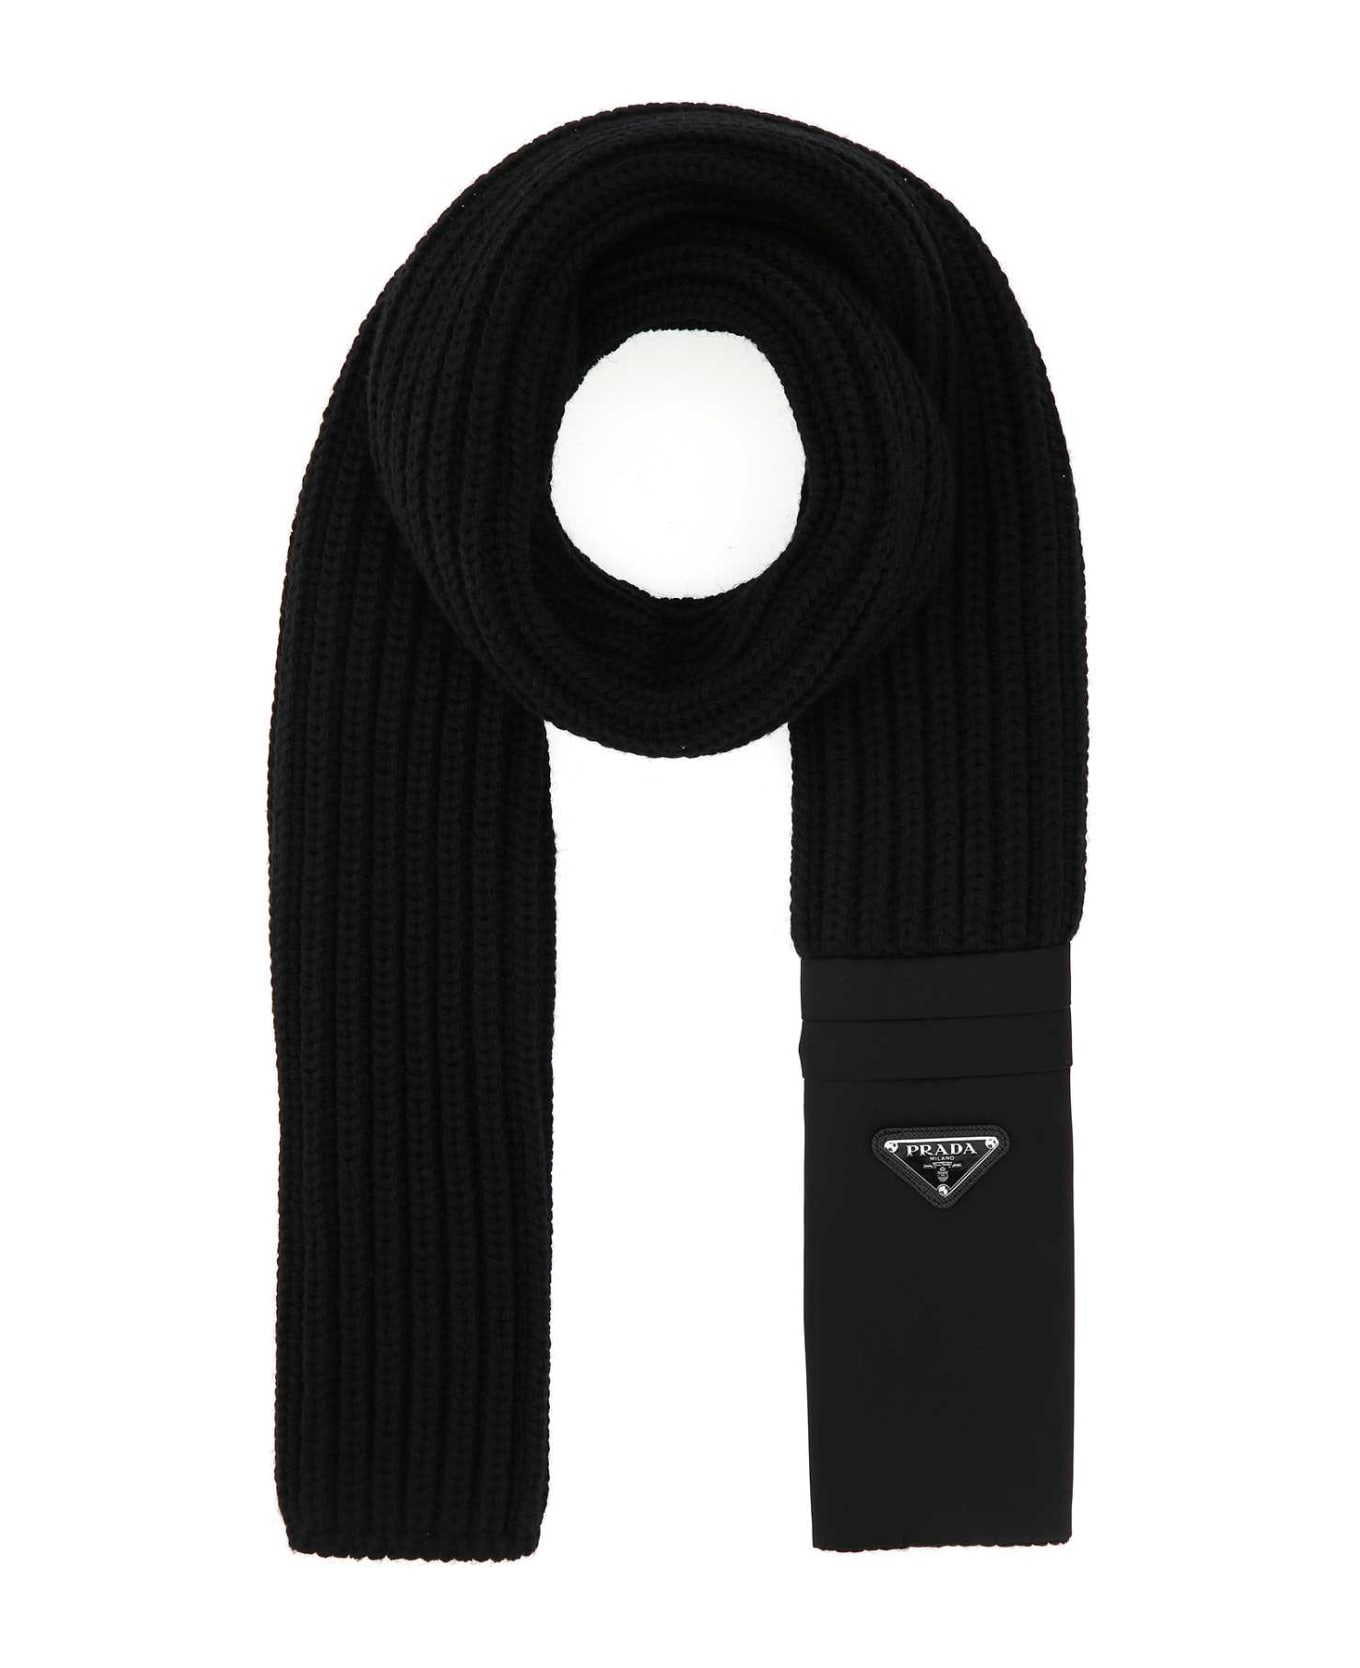 Prada Black Wool Scarf - F0002 スカーフ